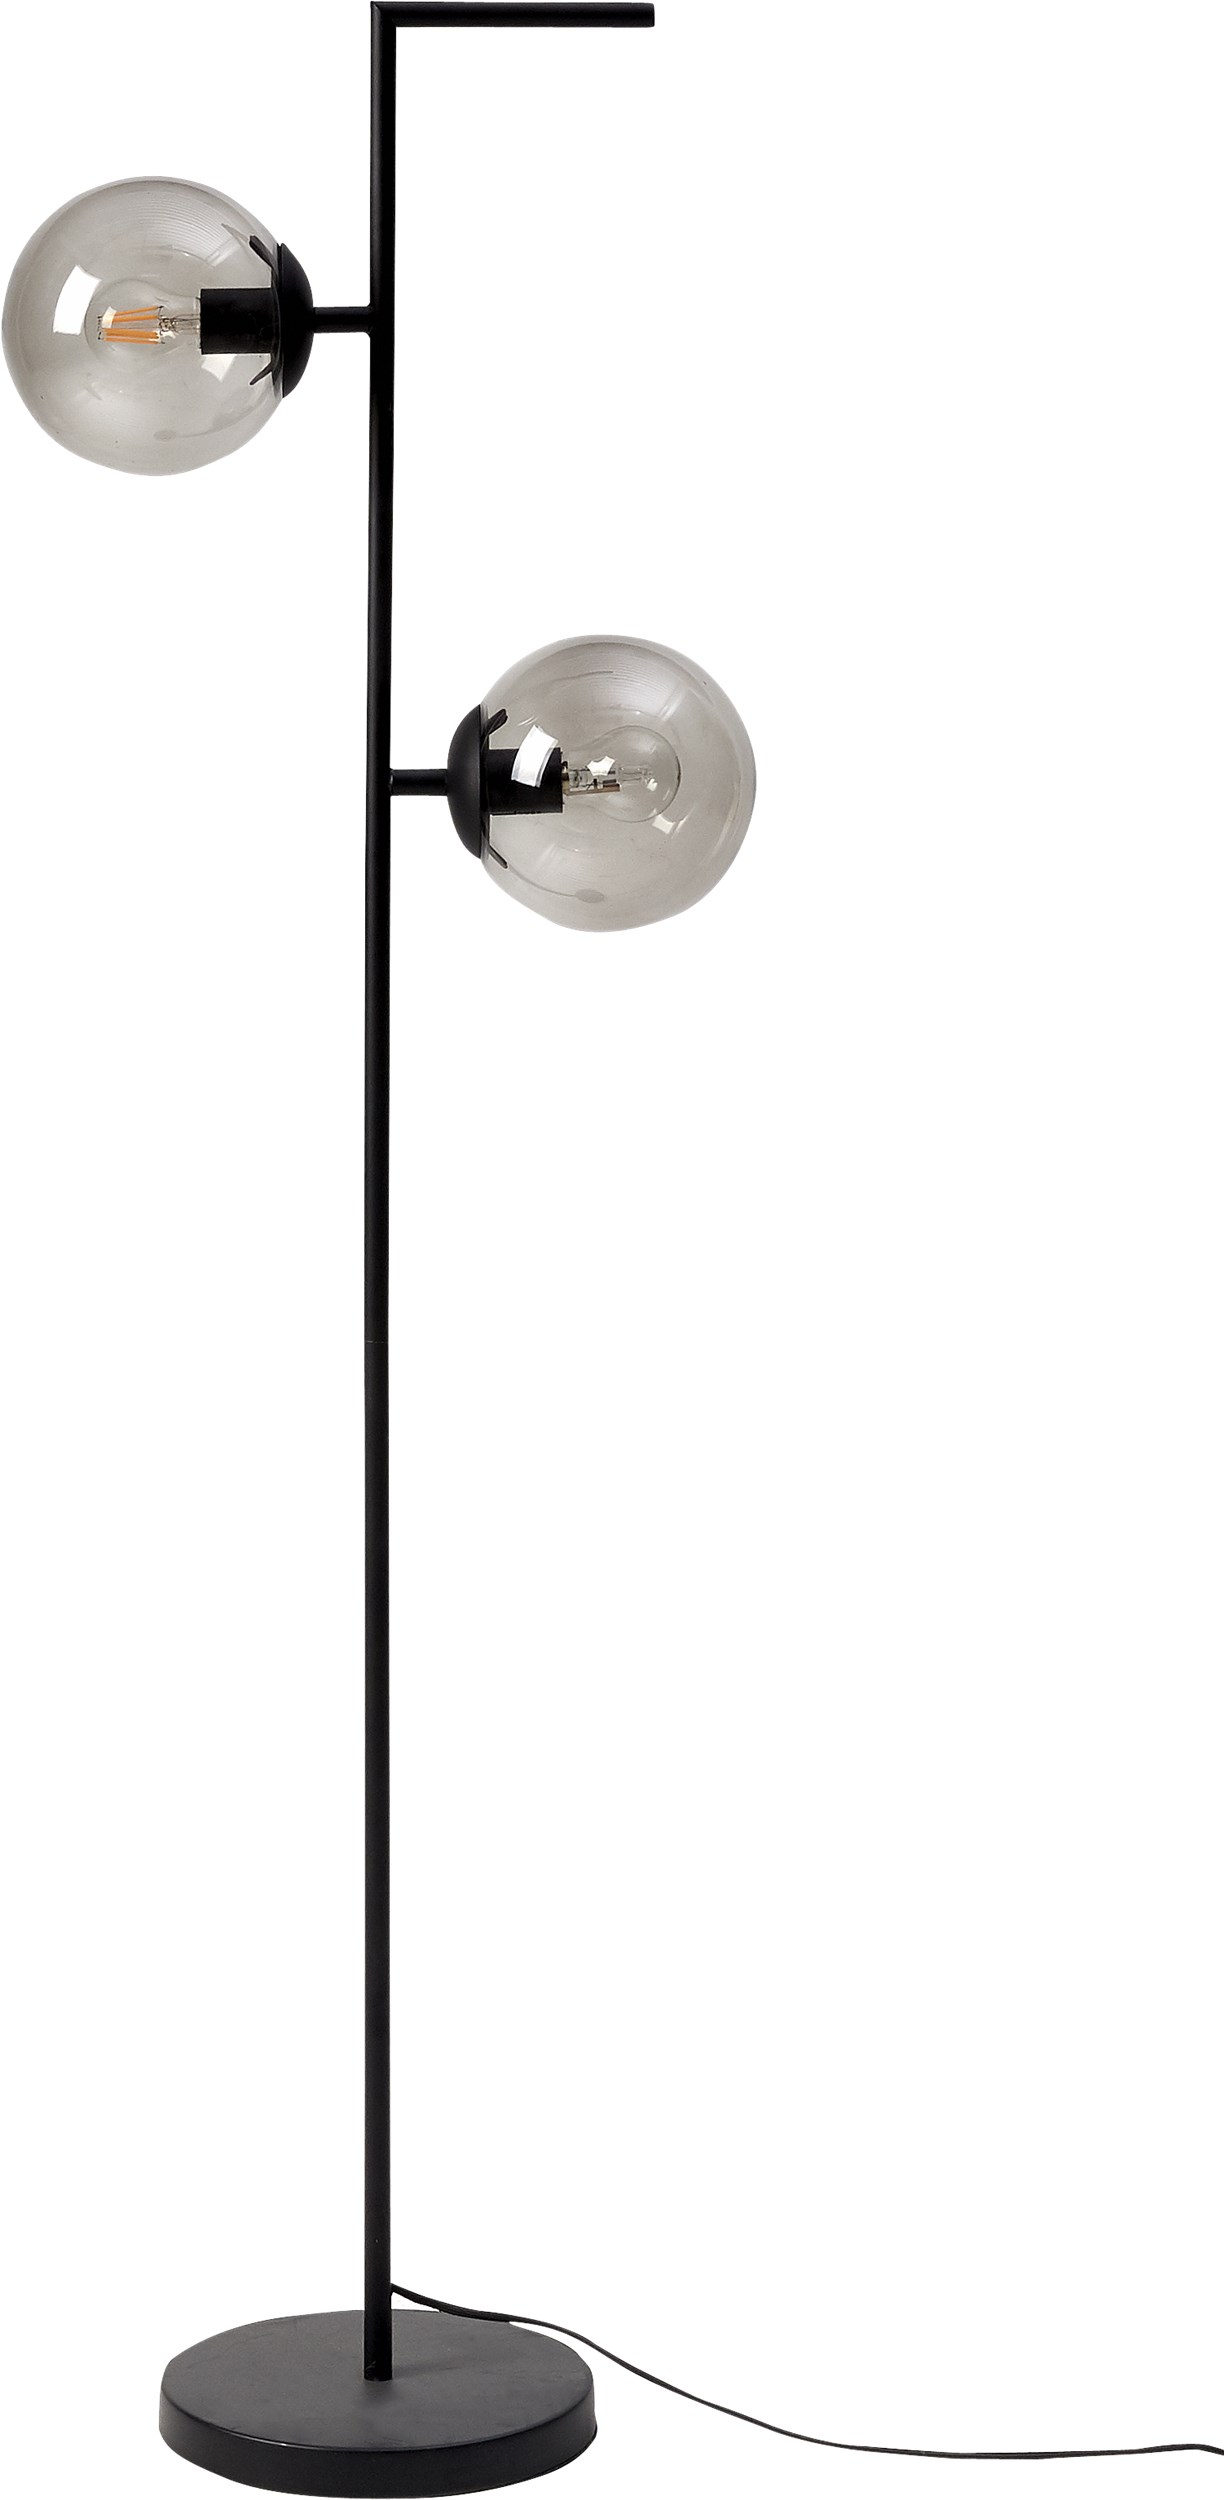 Pearl Golvlampa 154 x 18 cm - 2 rökfärgade glasskärmar, mattsvart metallstomme/bas och svart textilsladd